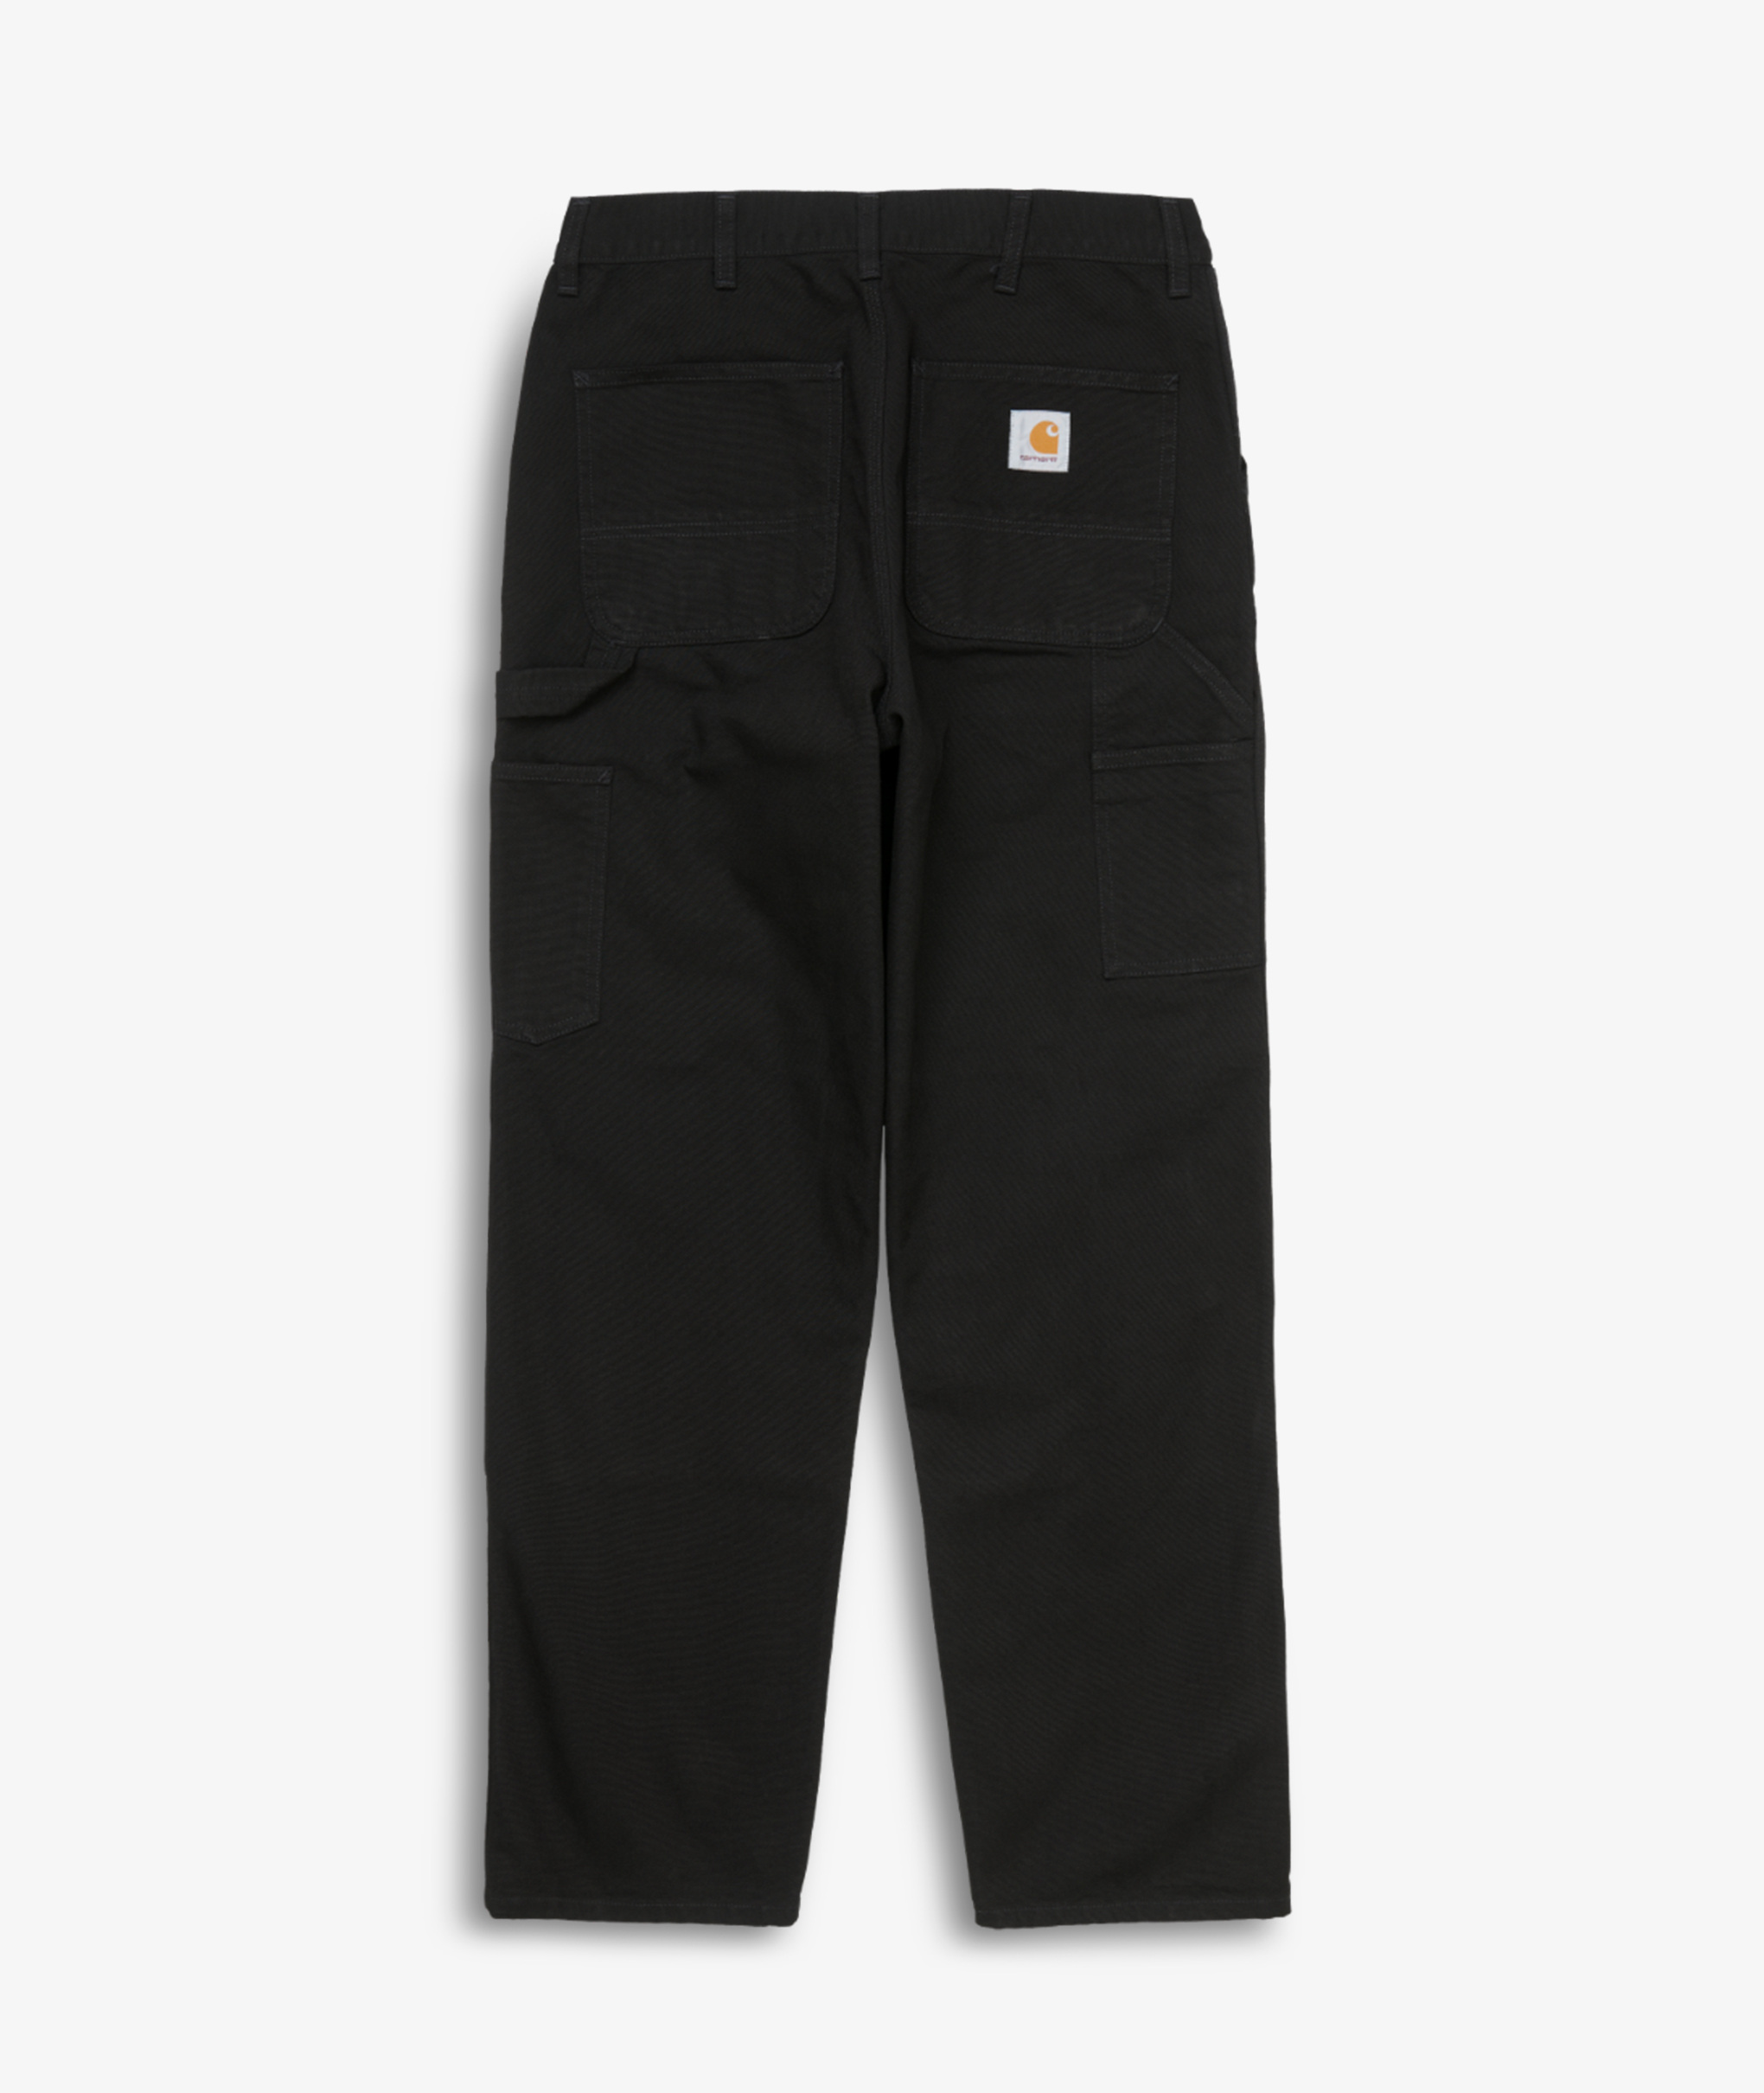 Carhartt WIP AVIATION PANT COLUMBIA - Cargo trousers - black rinsed/black -  Zalando.de